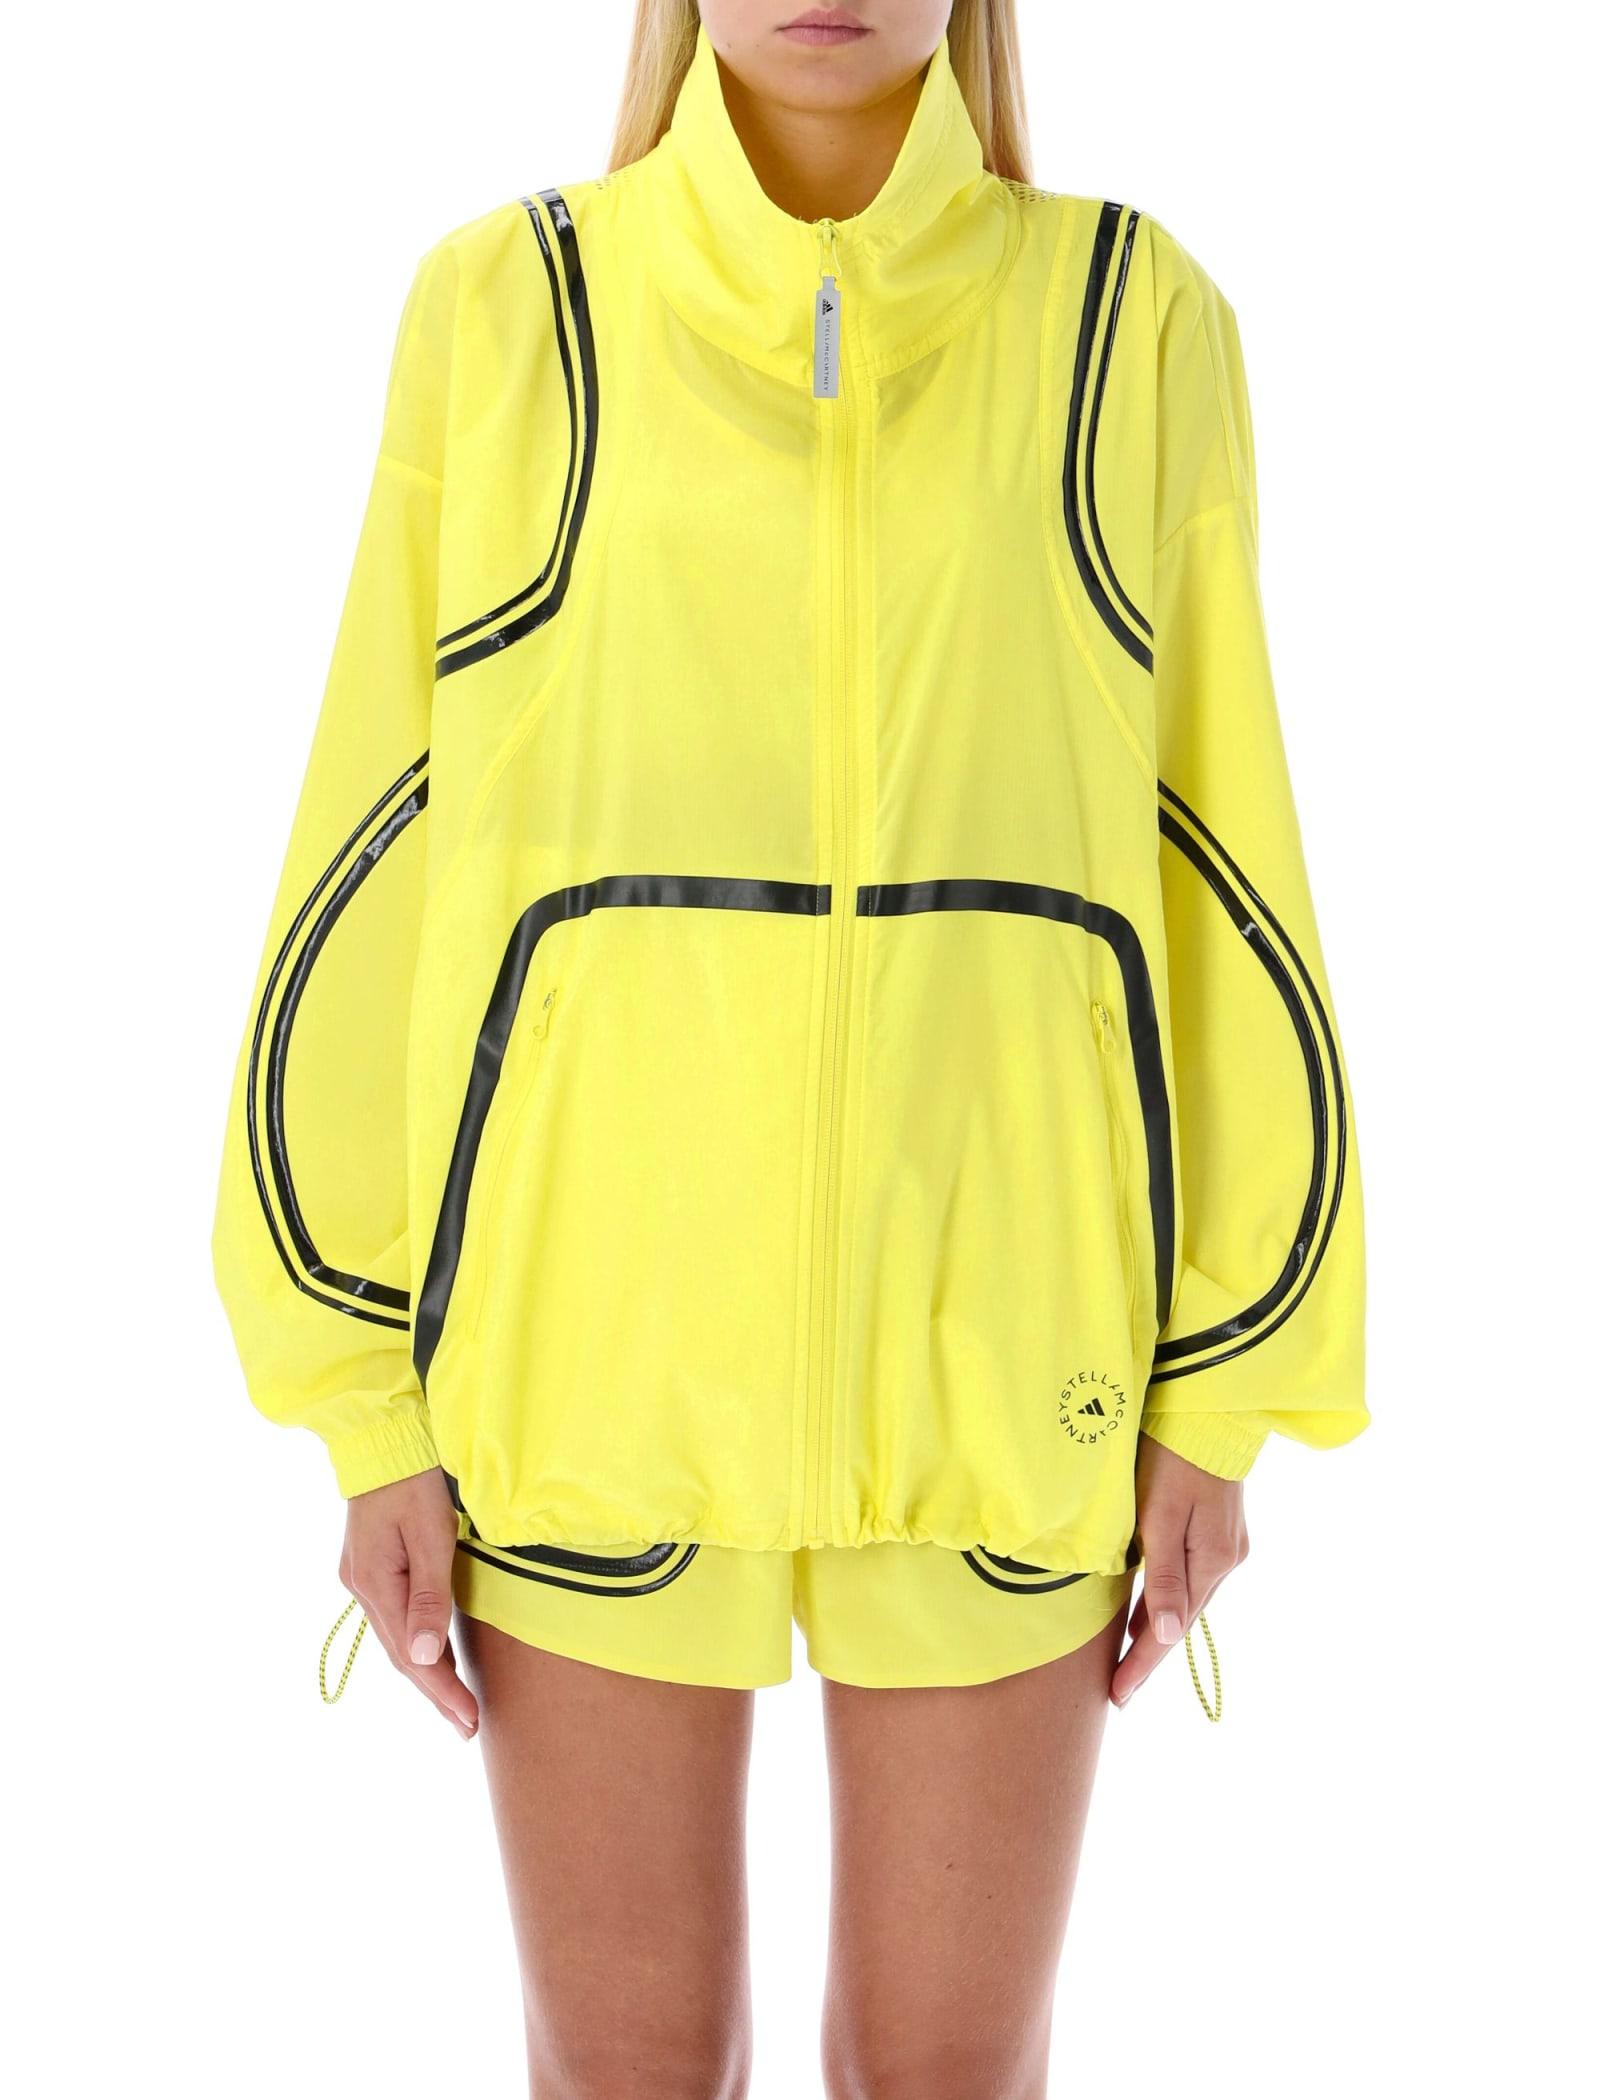 adidas By Stella McCartney Synthetic Truepace Jacket in Yellow | Lyst